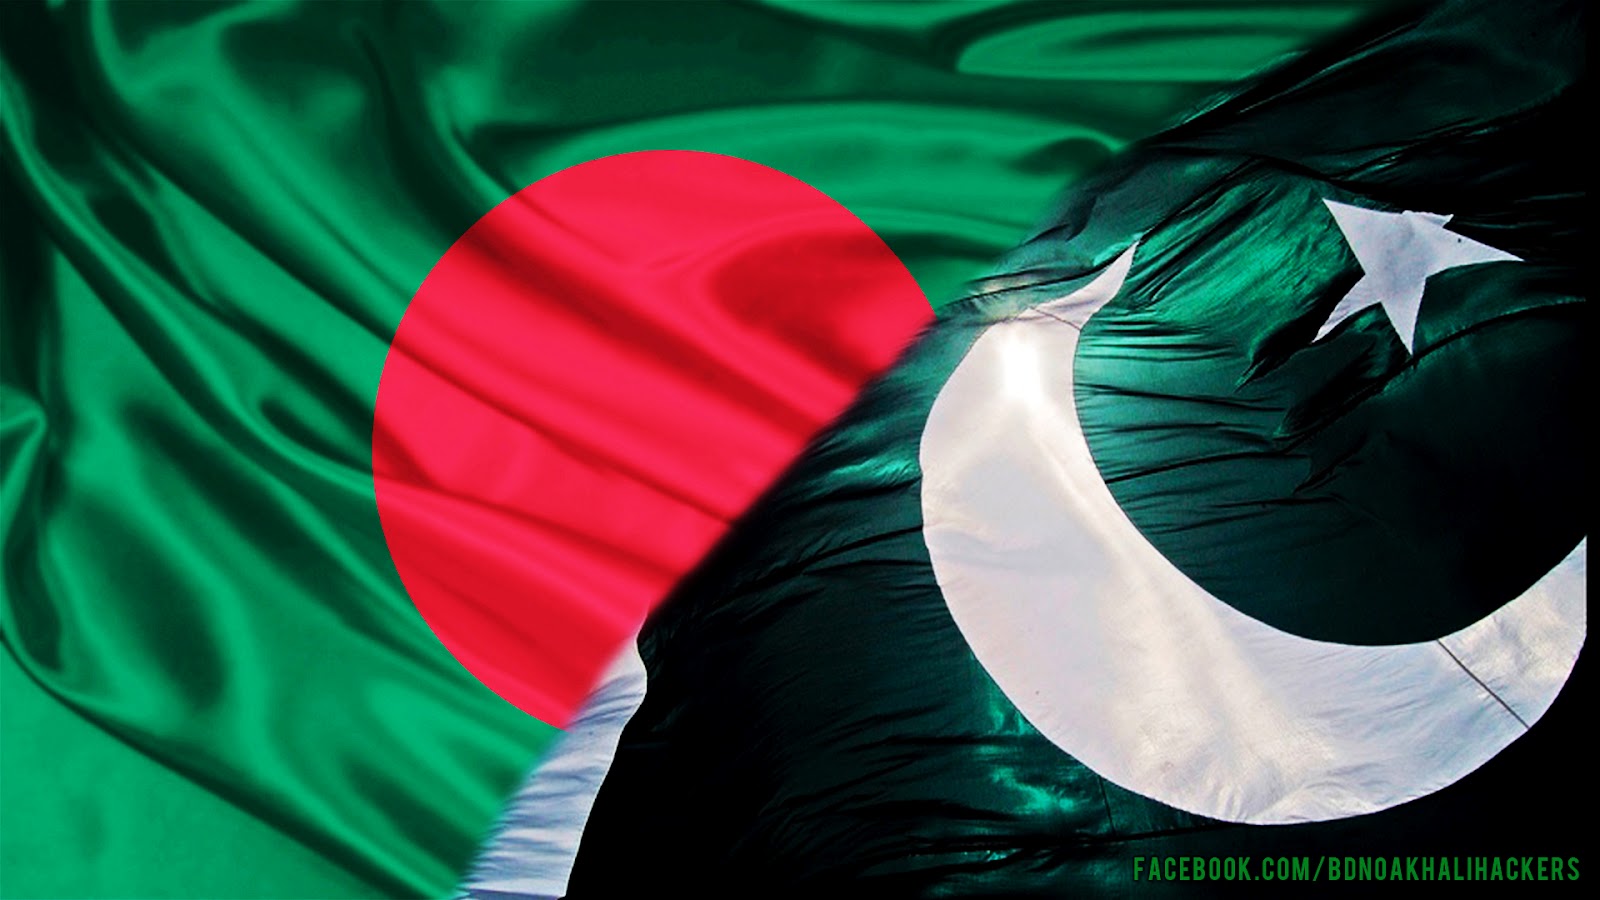 bangladesh flag wallpaper hd,green,red,flag,textile,photography